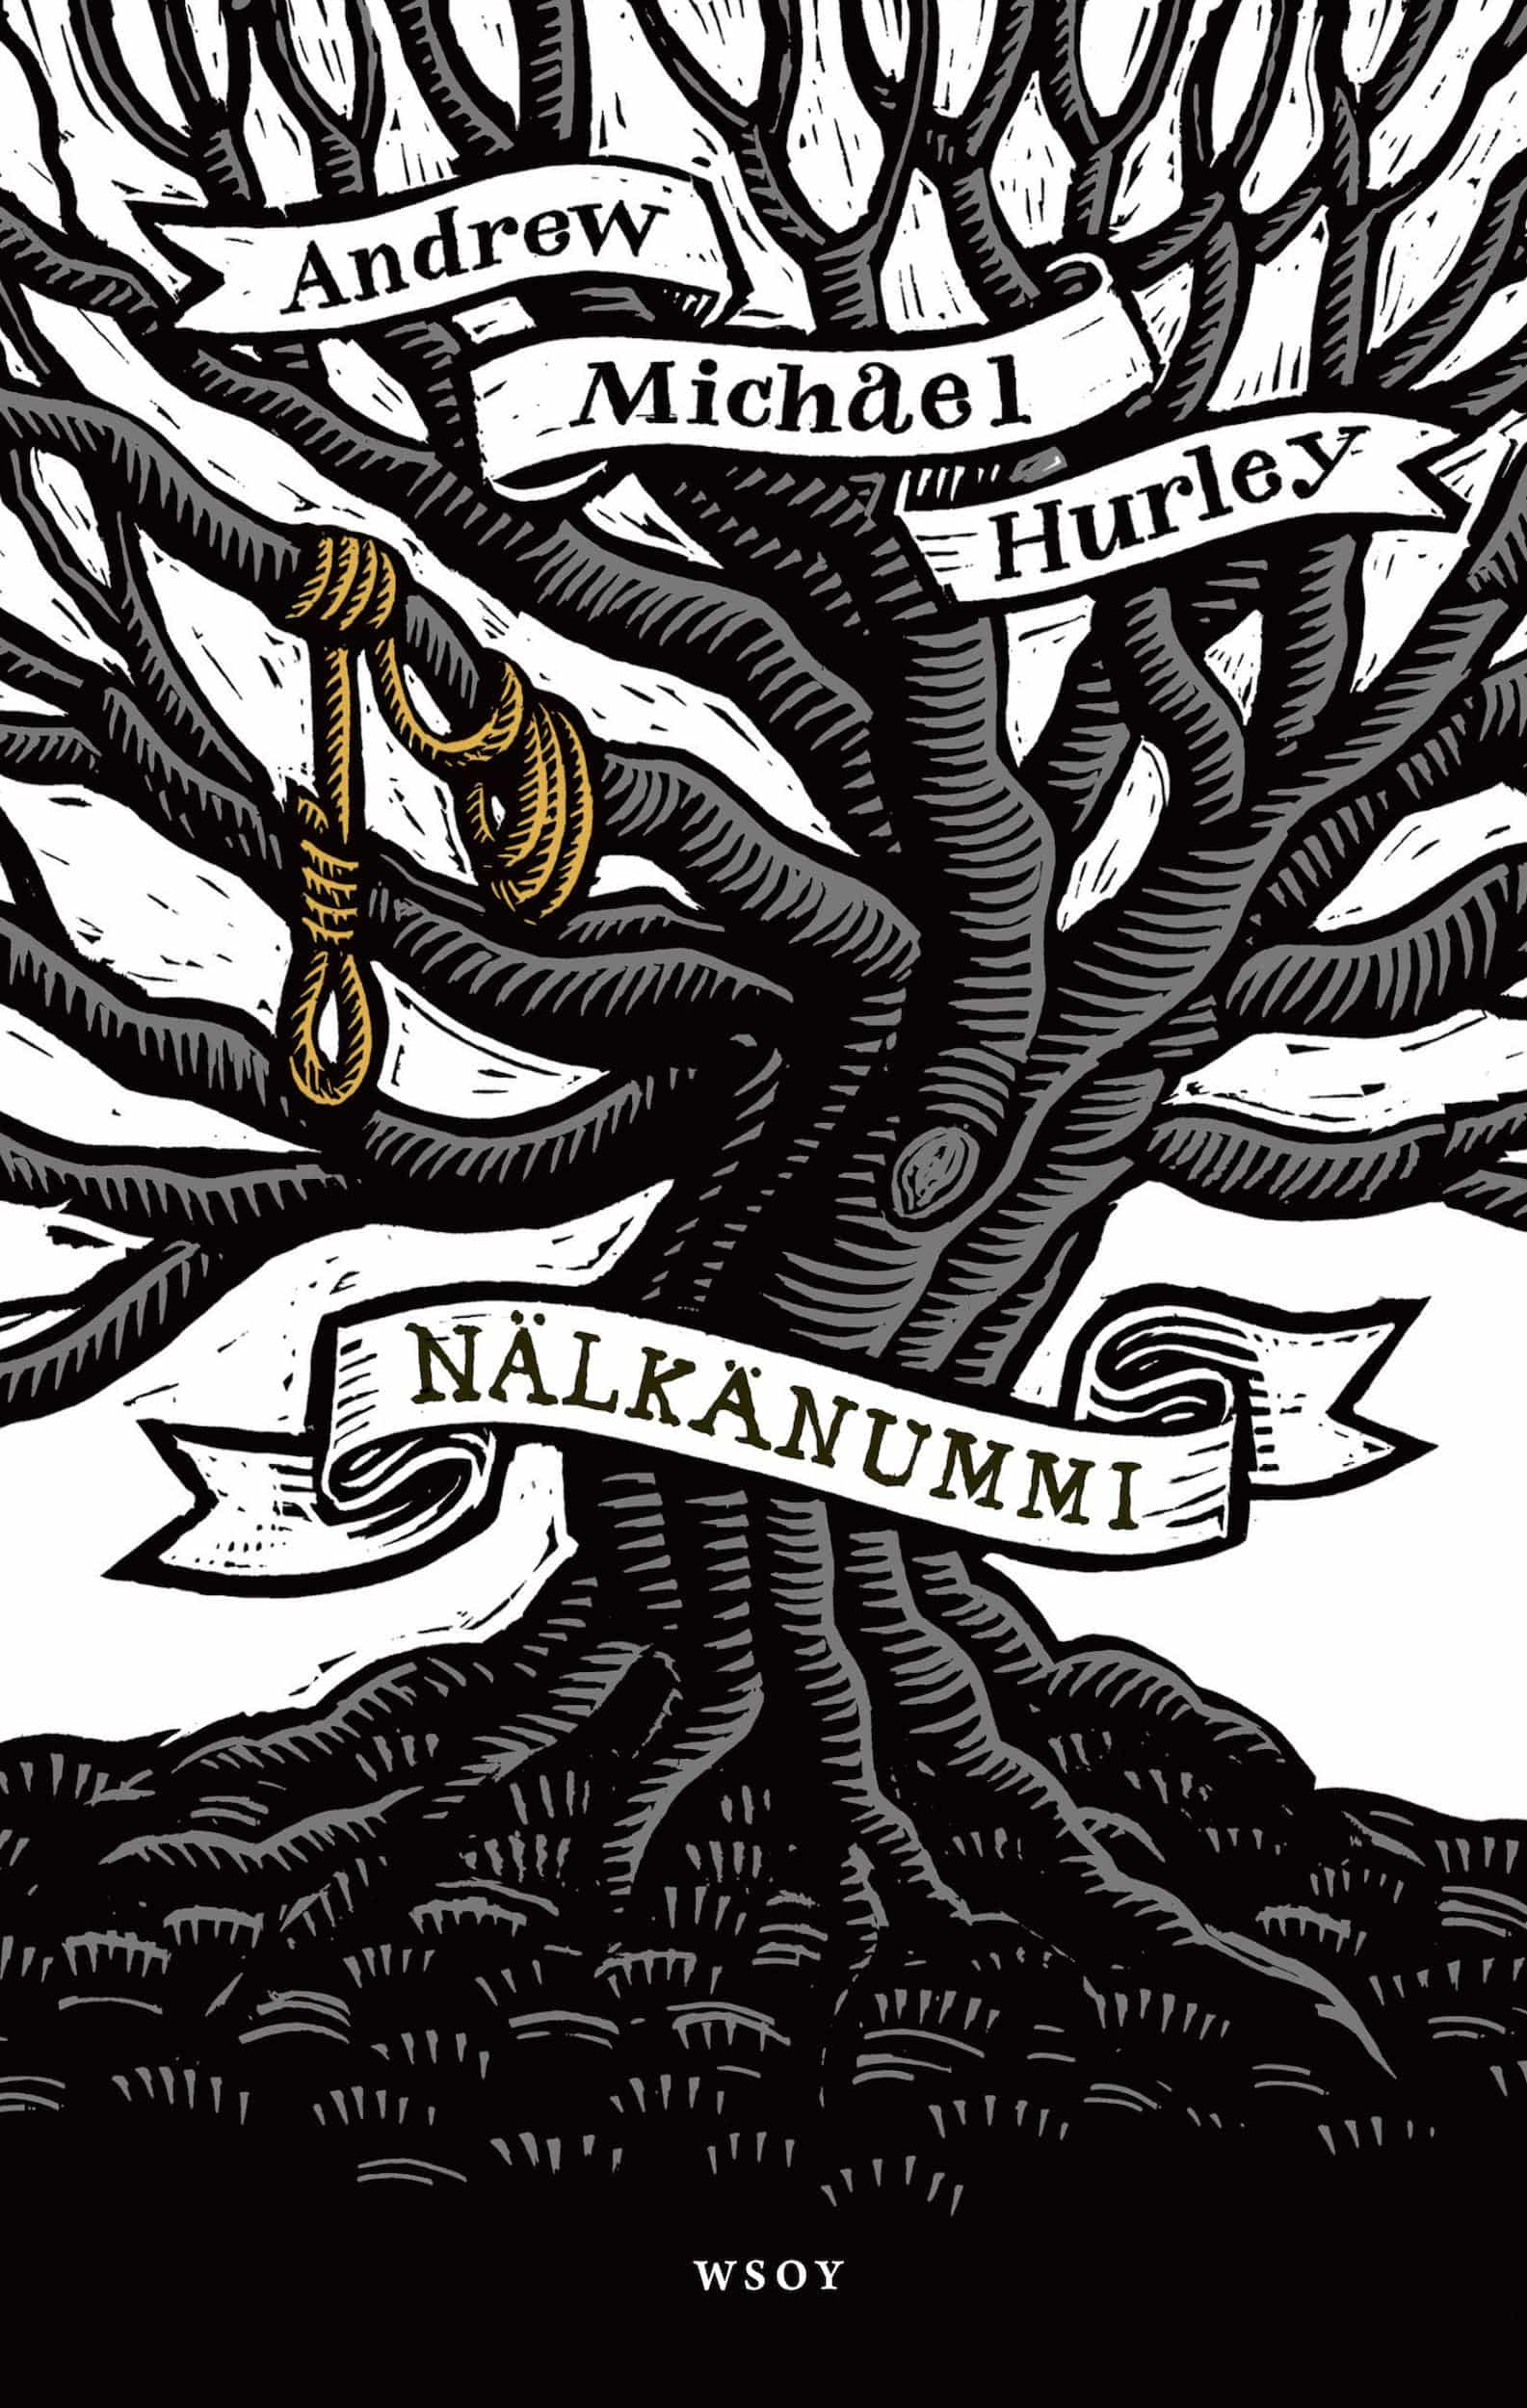 Nälkänummi (Finnish language, 2020)